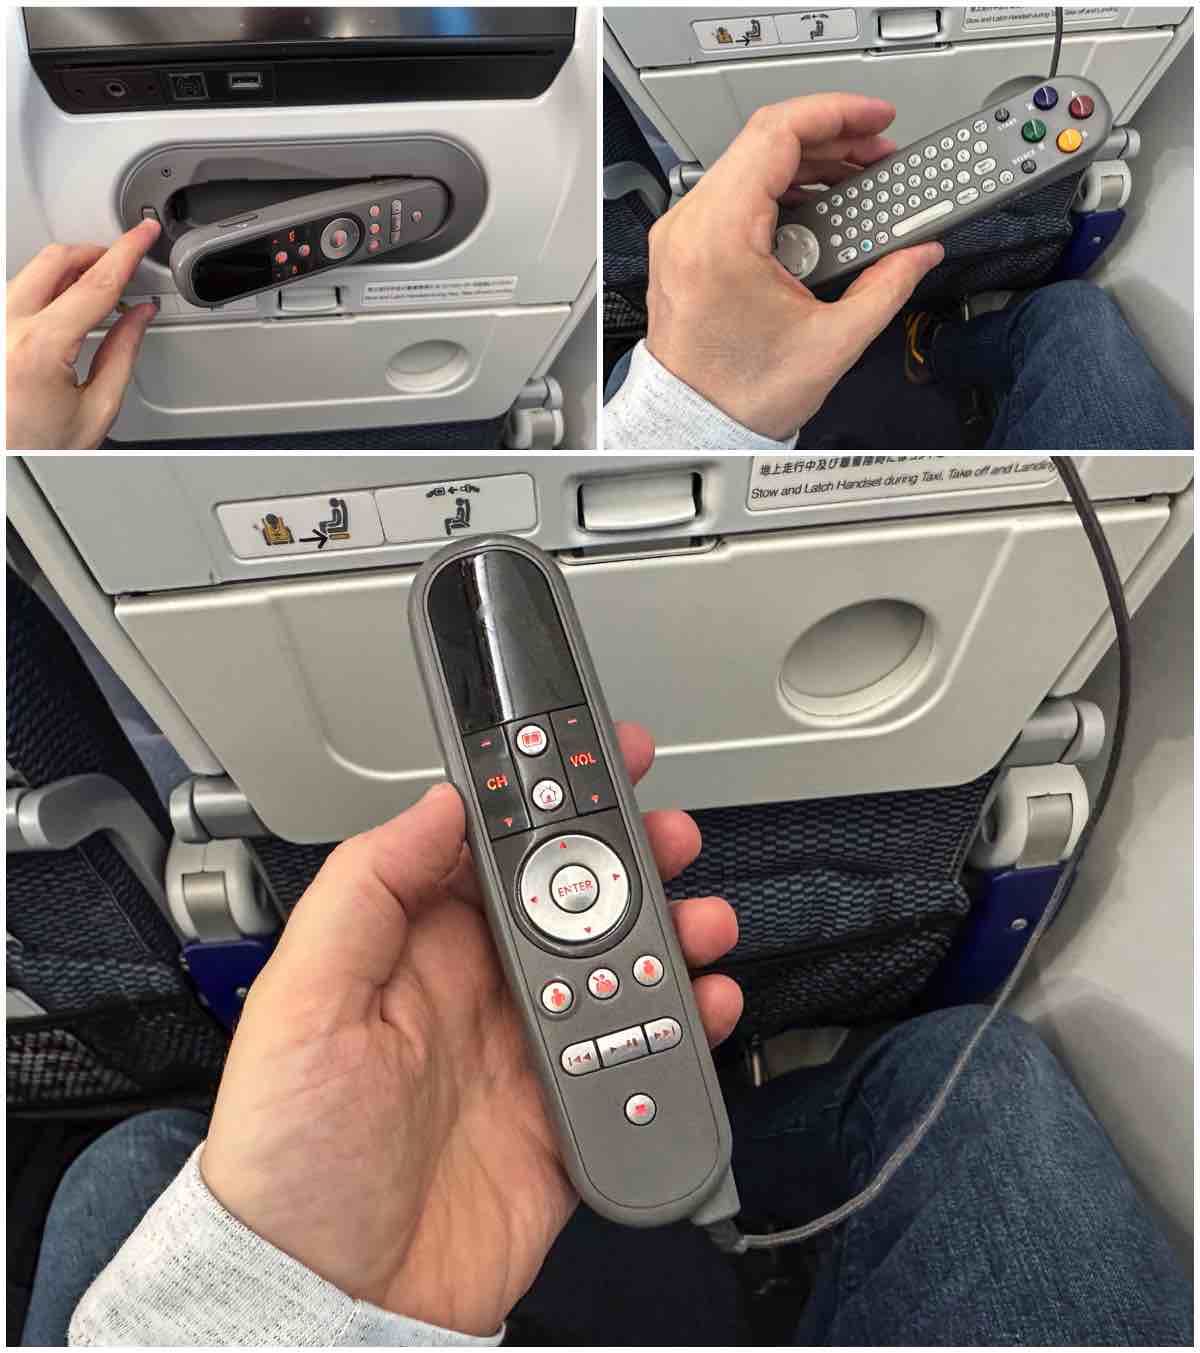 ANA 787-8 economy entertainment system remote control